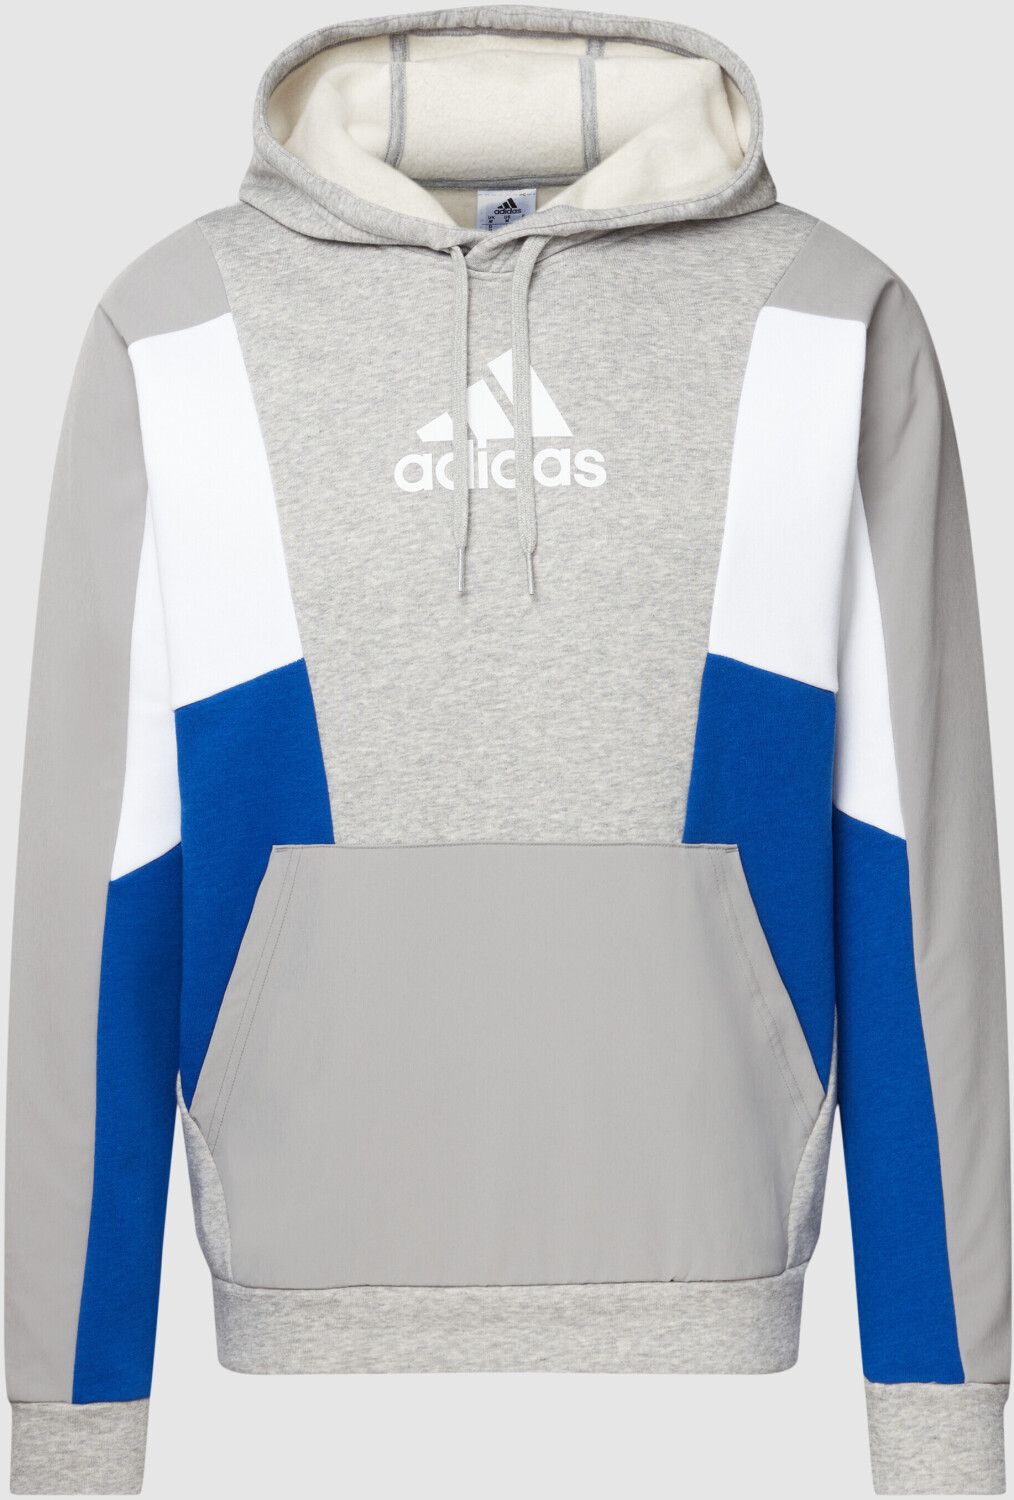 34,76 Preisvergleich Hoodie blue | € grey Adidas medium Colorblock bei Essentials ab heather/royal